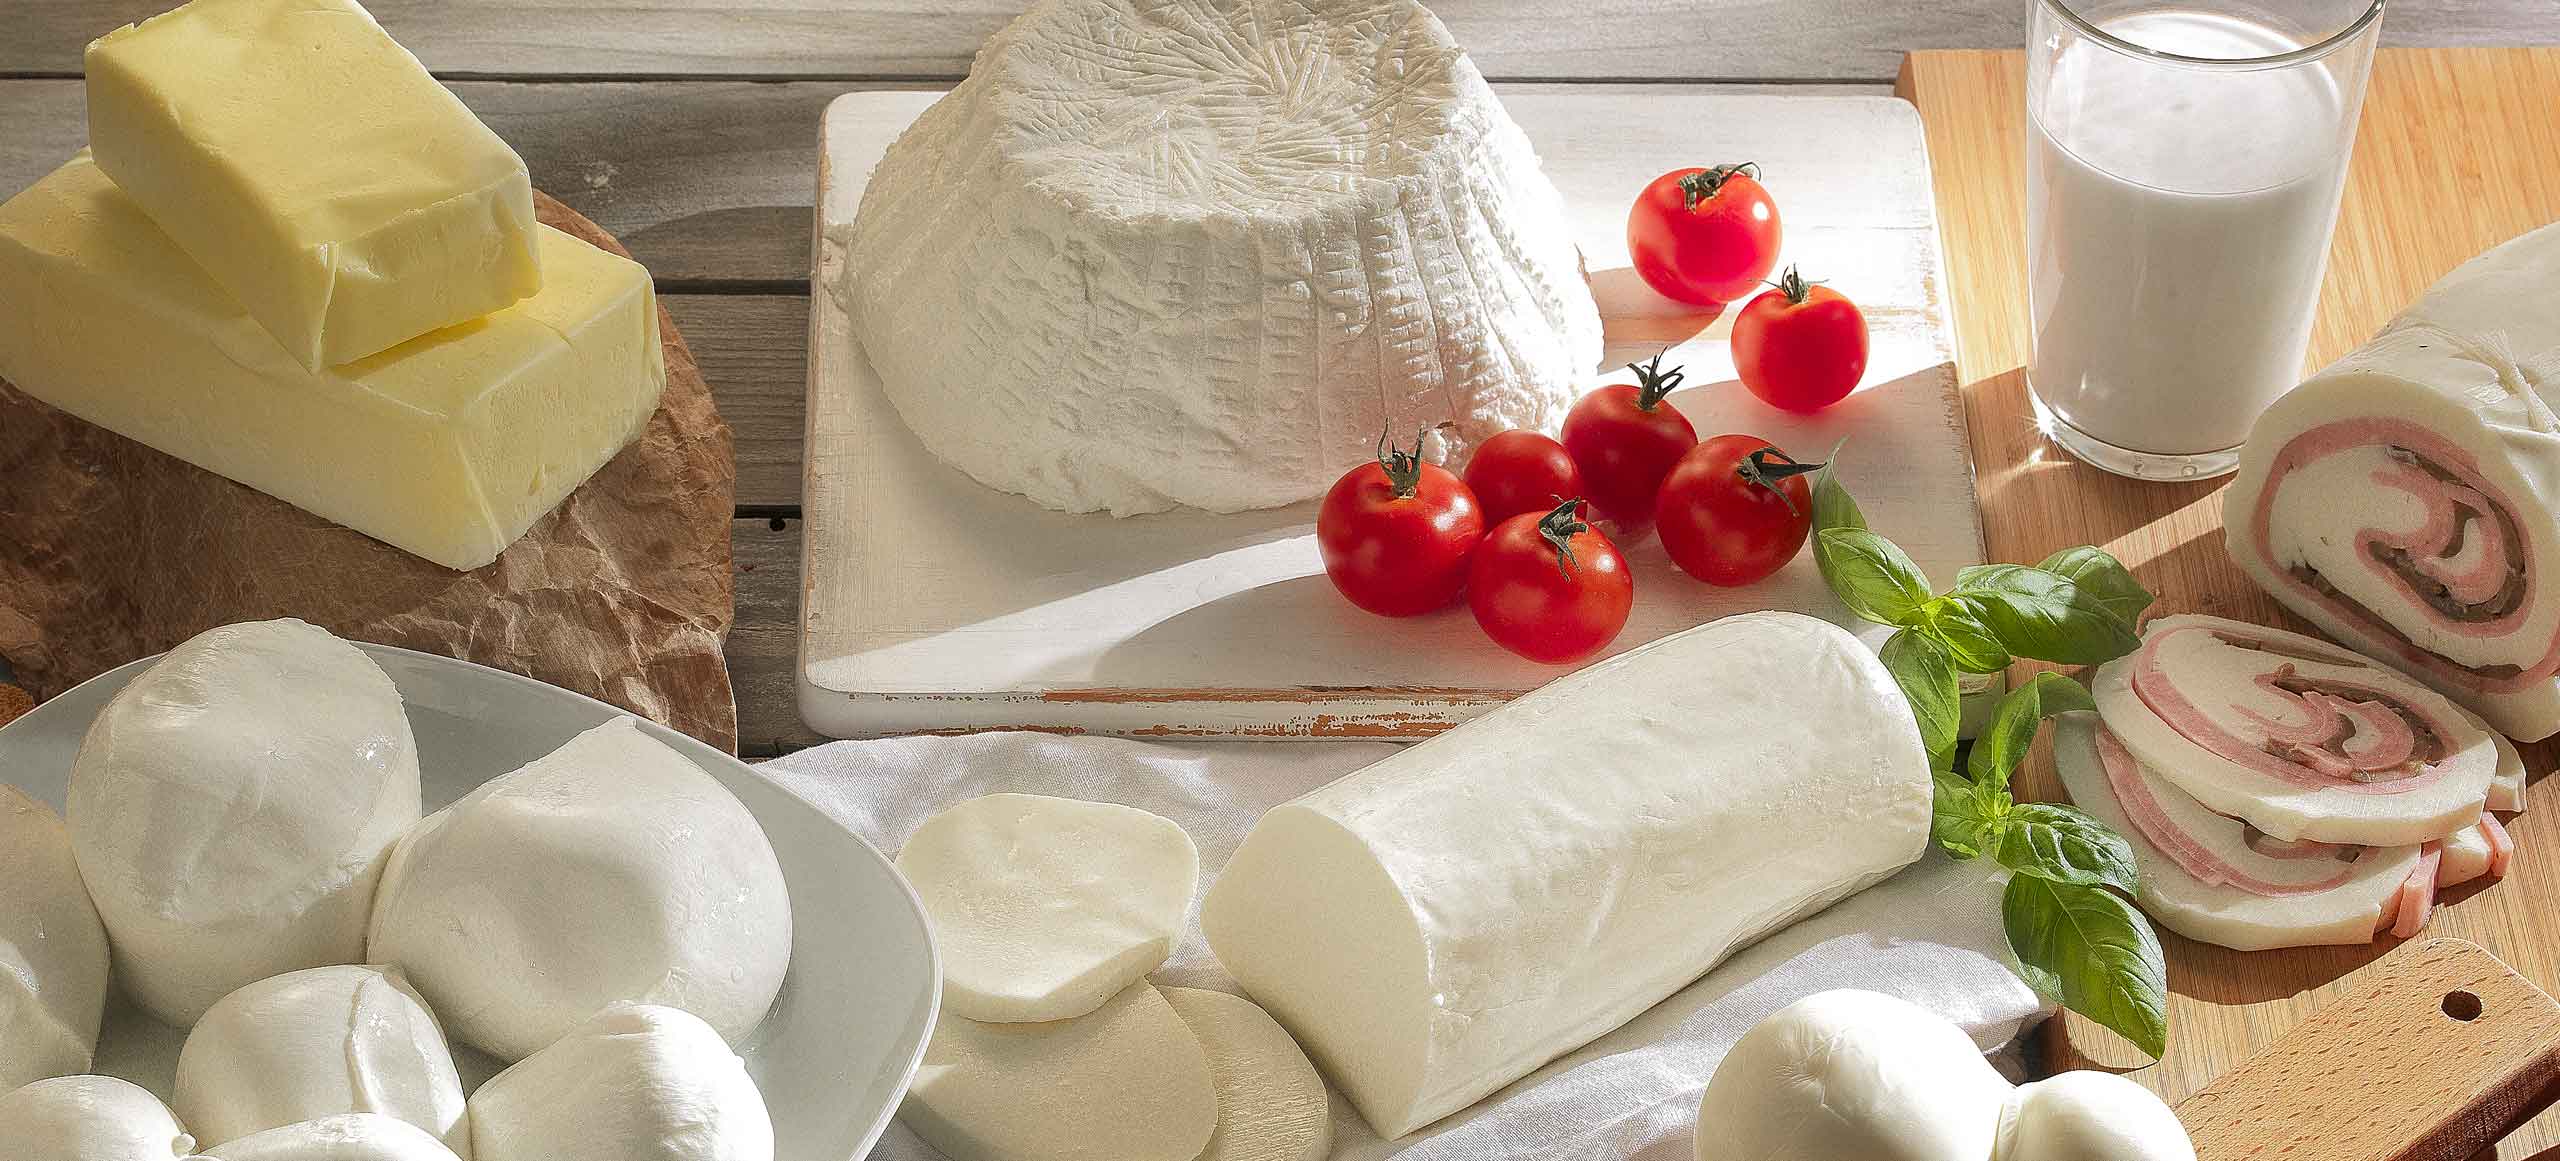 Caseificio Dicecca in Italy, Europe | Cheesemakers - Rated 1.2